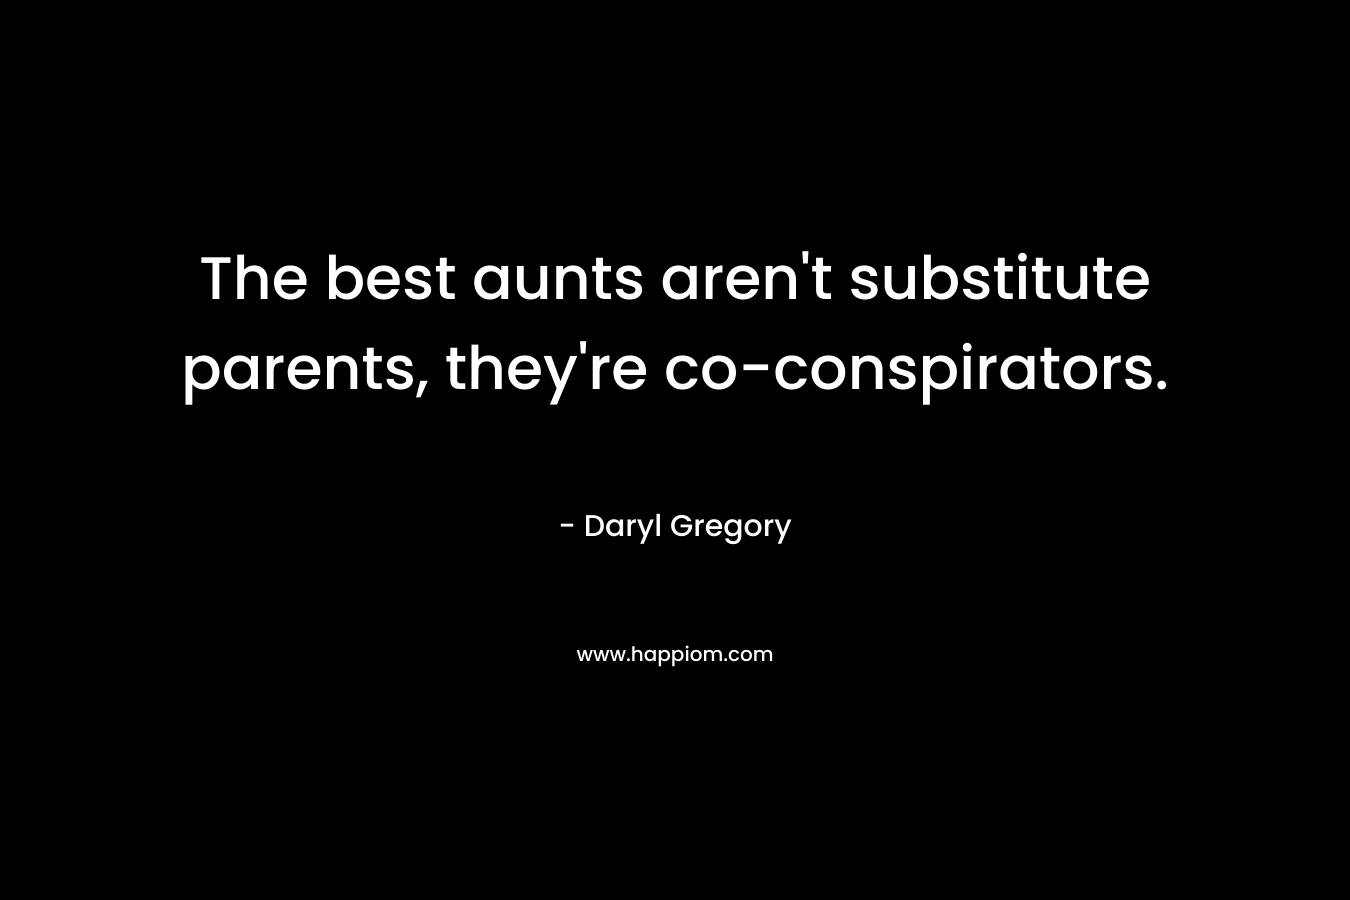 The best aunts aren't substitute parents, they're co-conspirators.